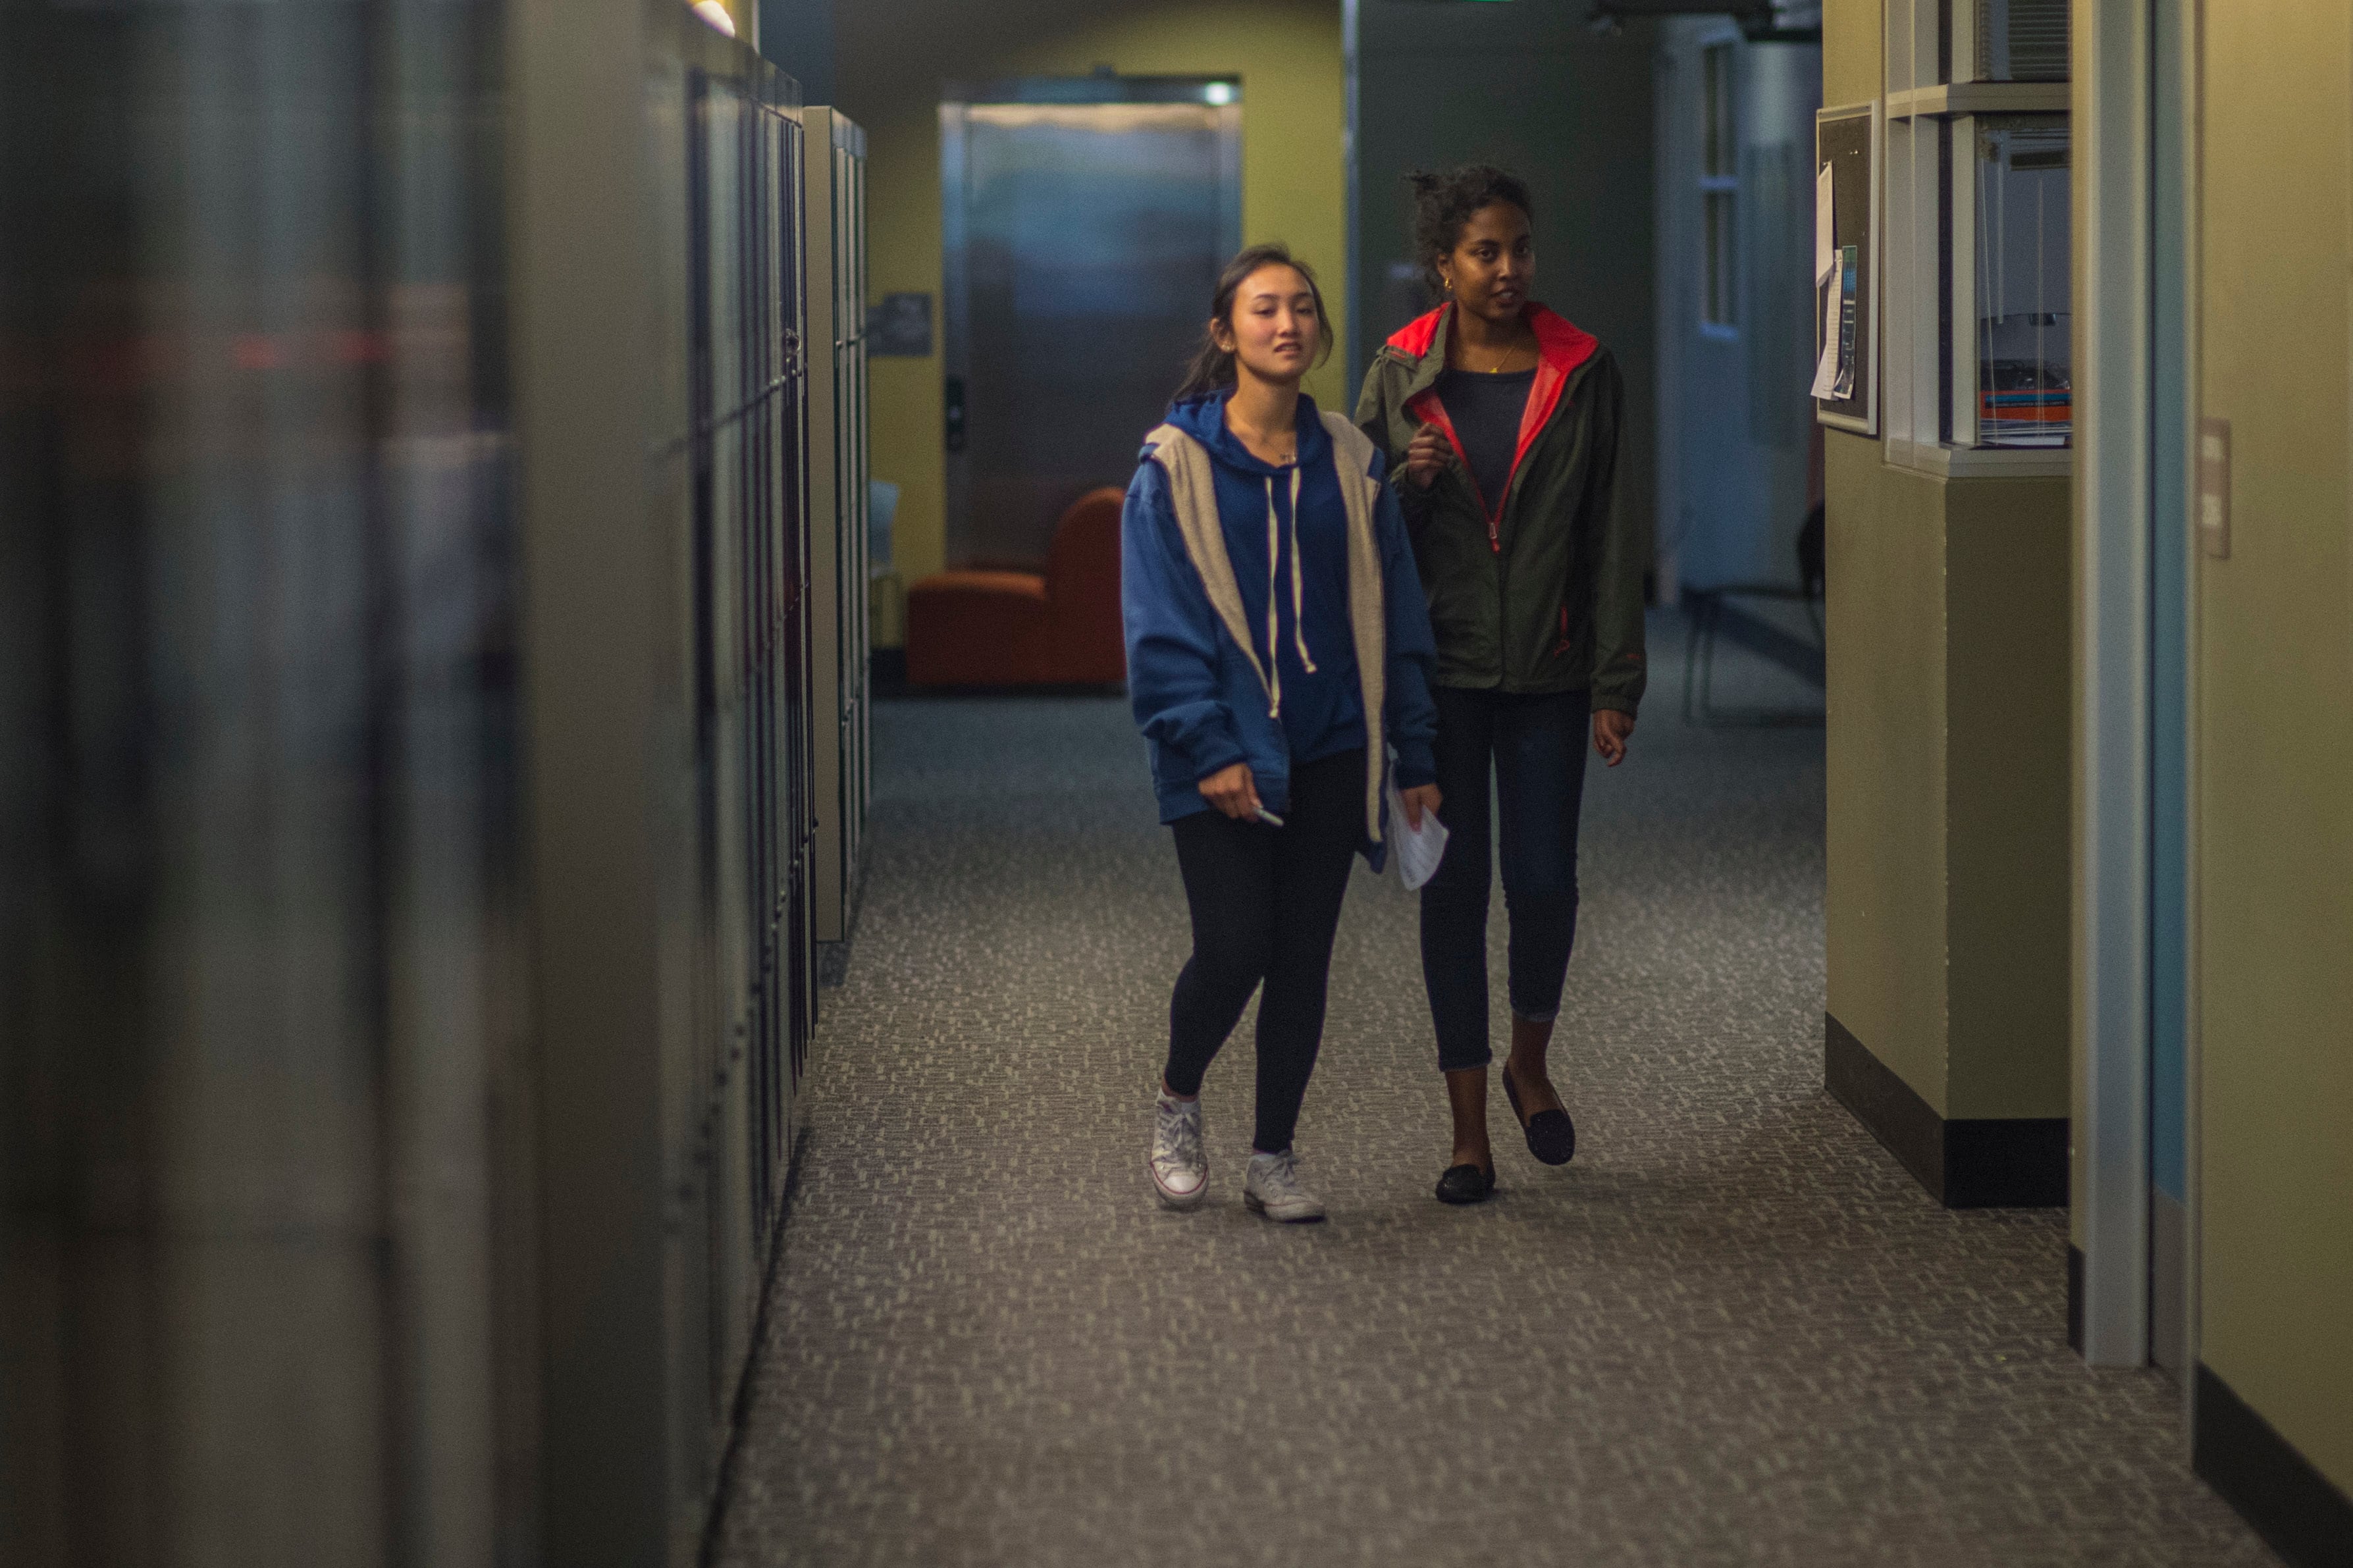 Two high school students walking in a hallway.